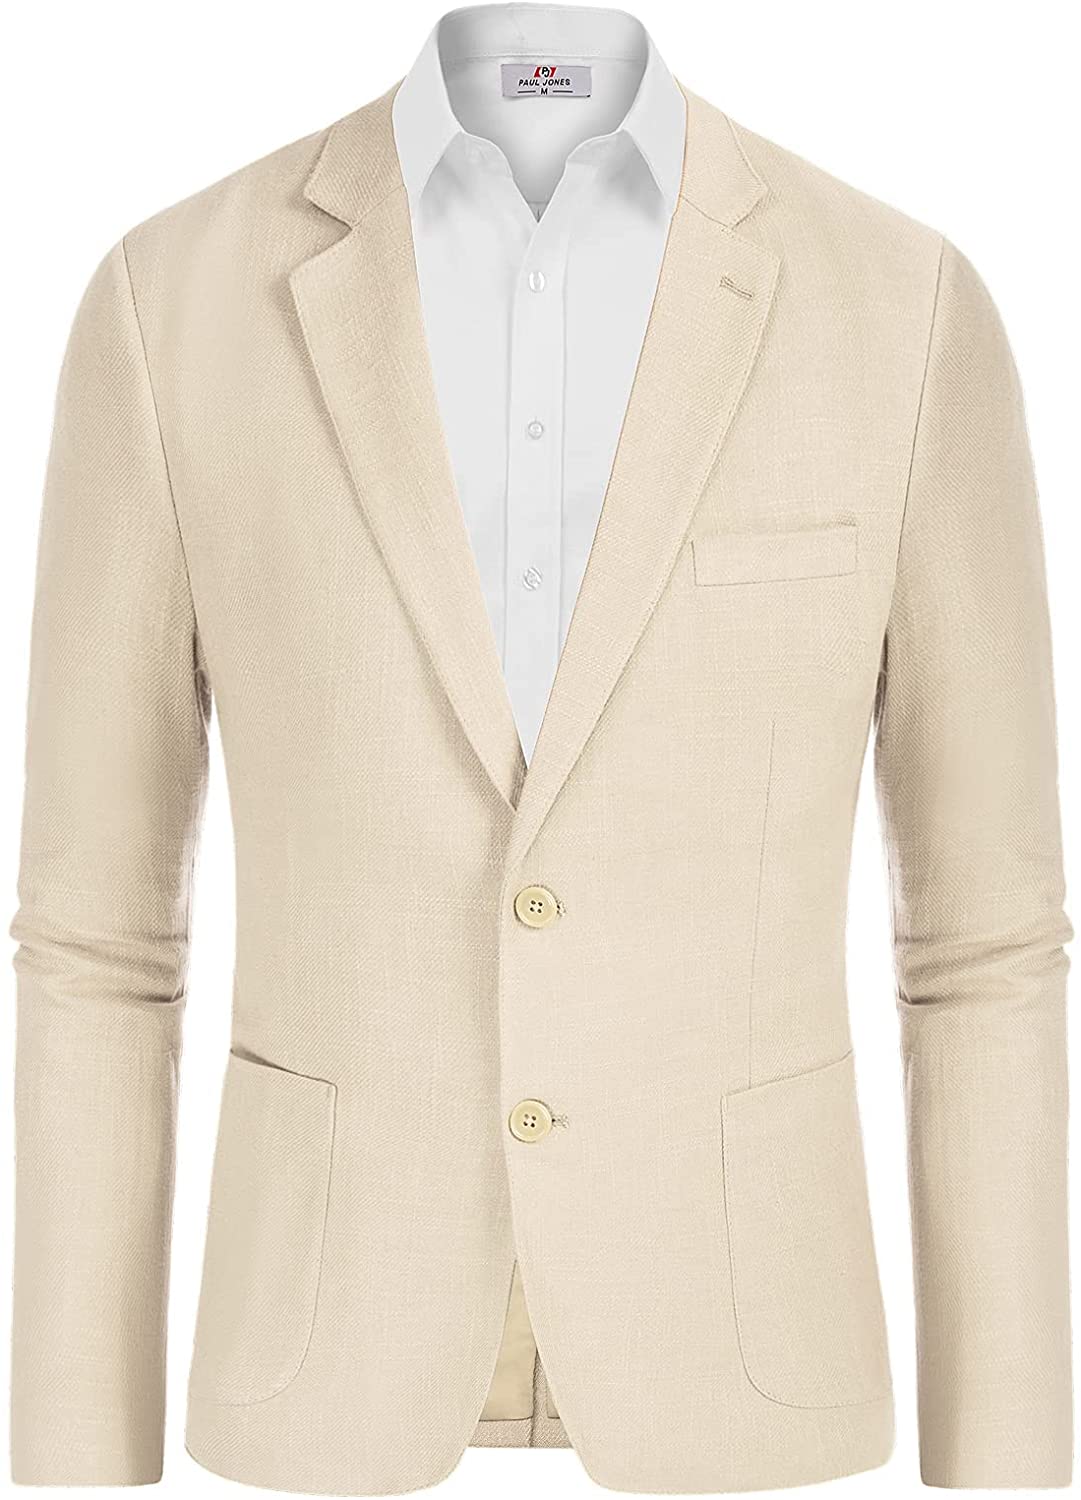 PJ PAUL JONES Men's Lightweight Linen Suit Jacket Tailored 2 Button Blazer Sport Coat 